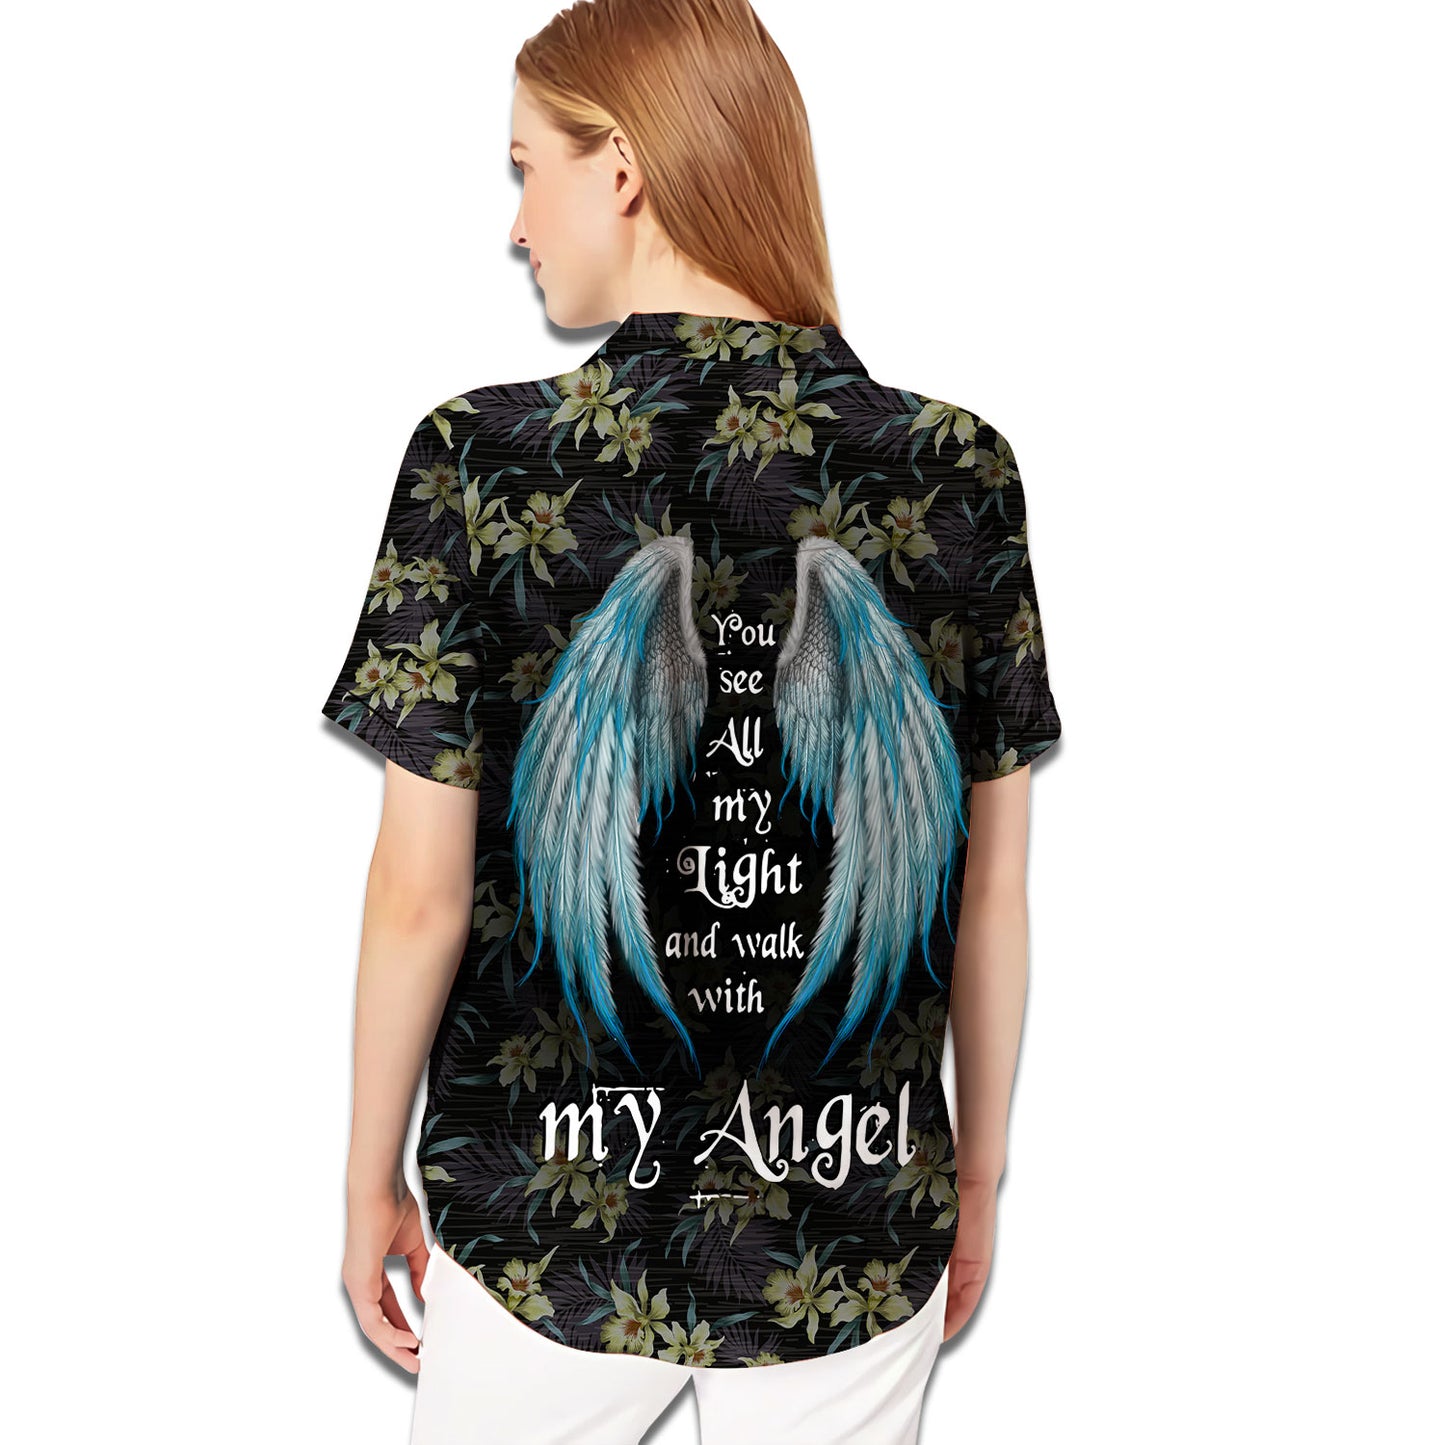 Demon Angel Couple Matching Hawaiian Shirt Personalizedwitch For Couple